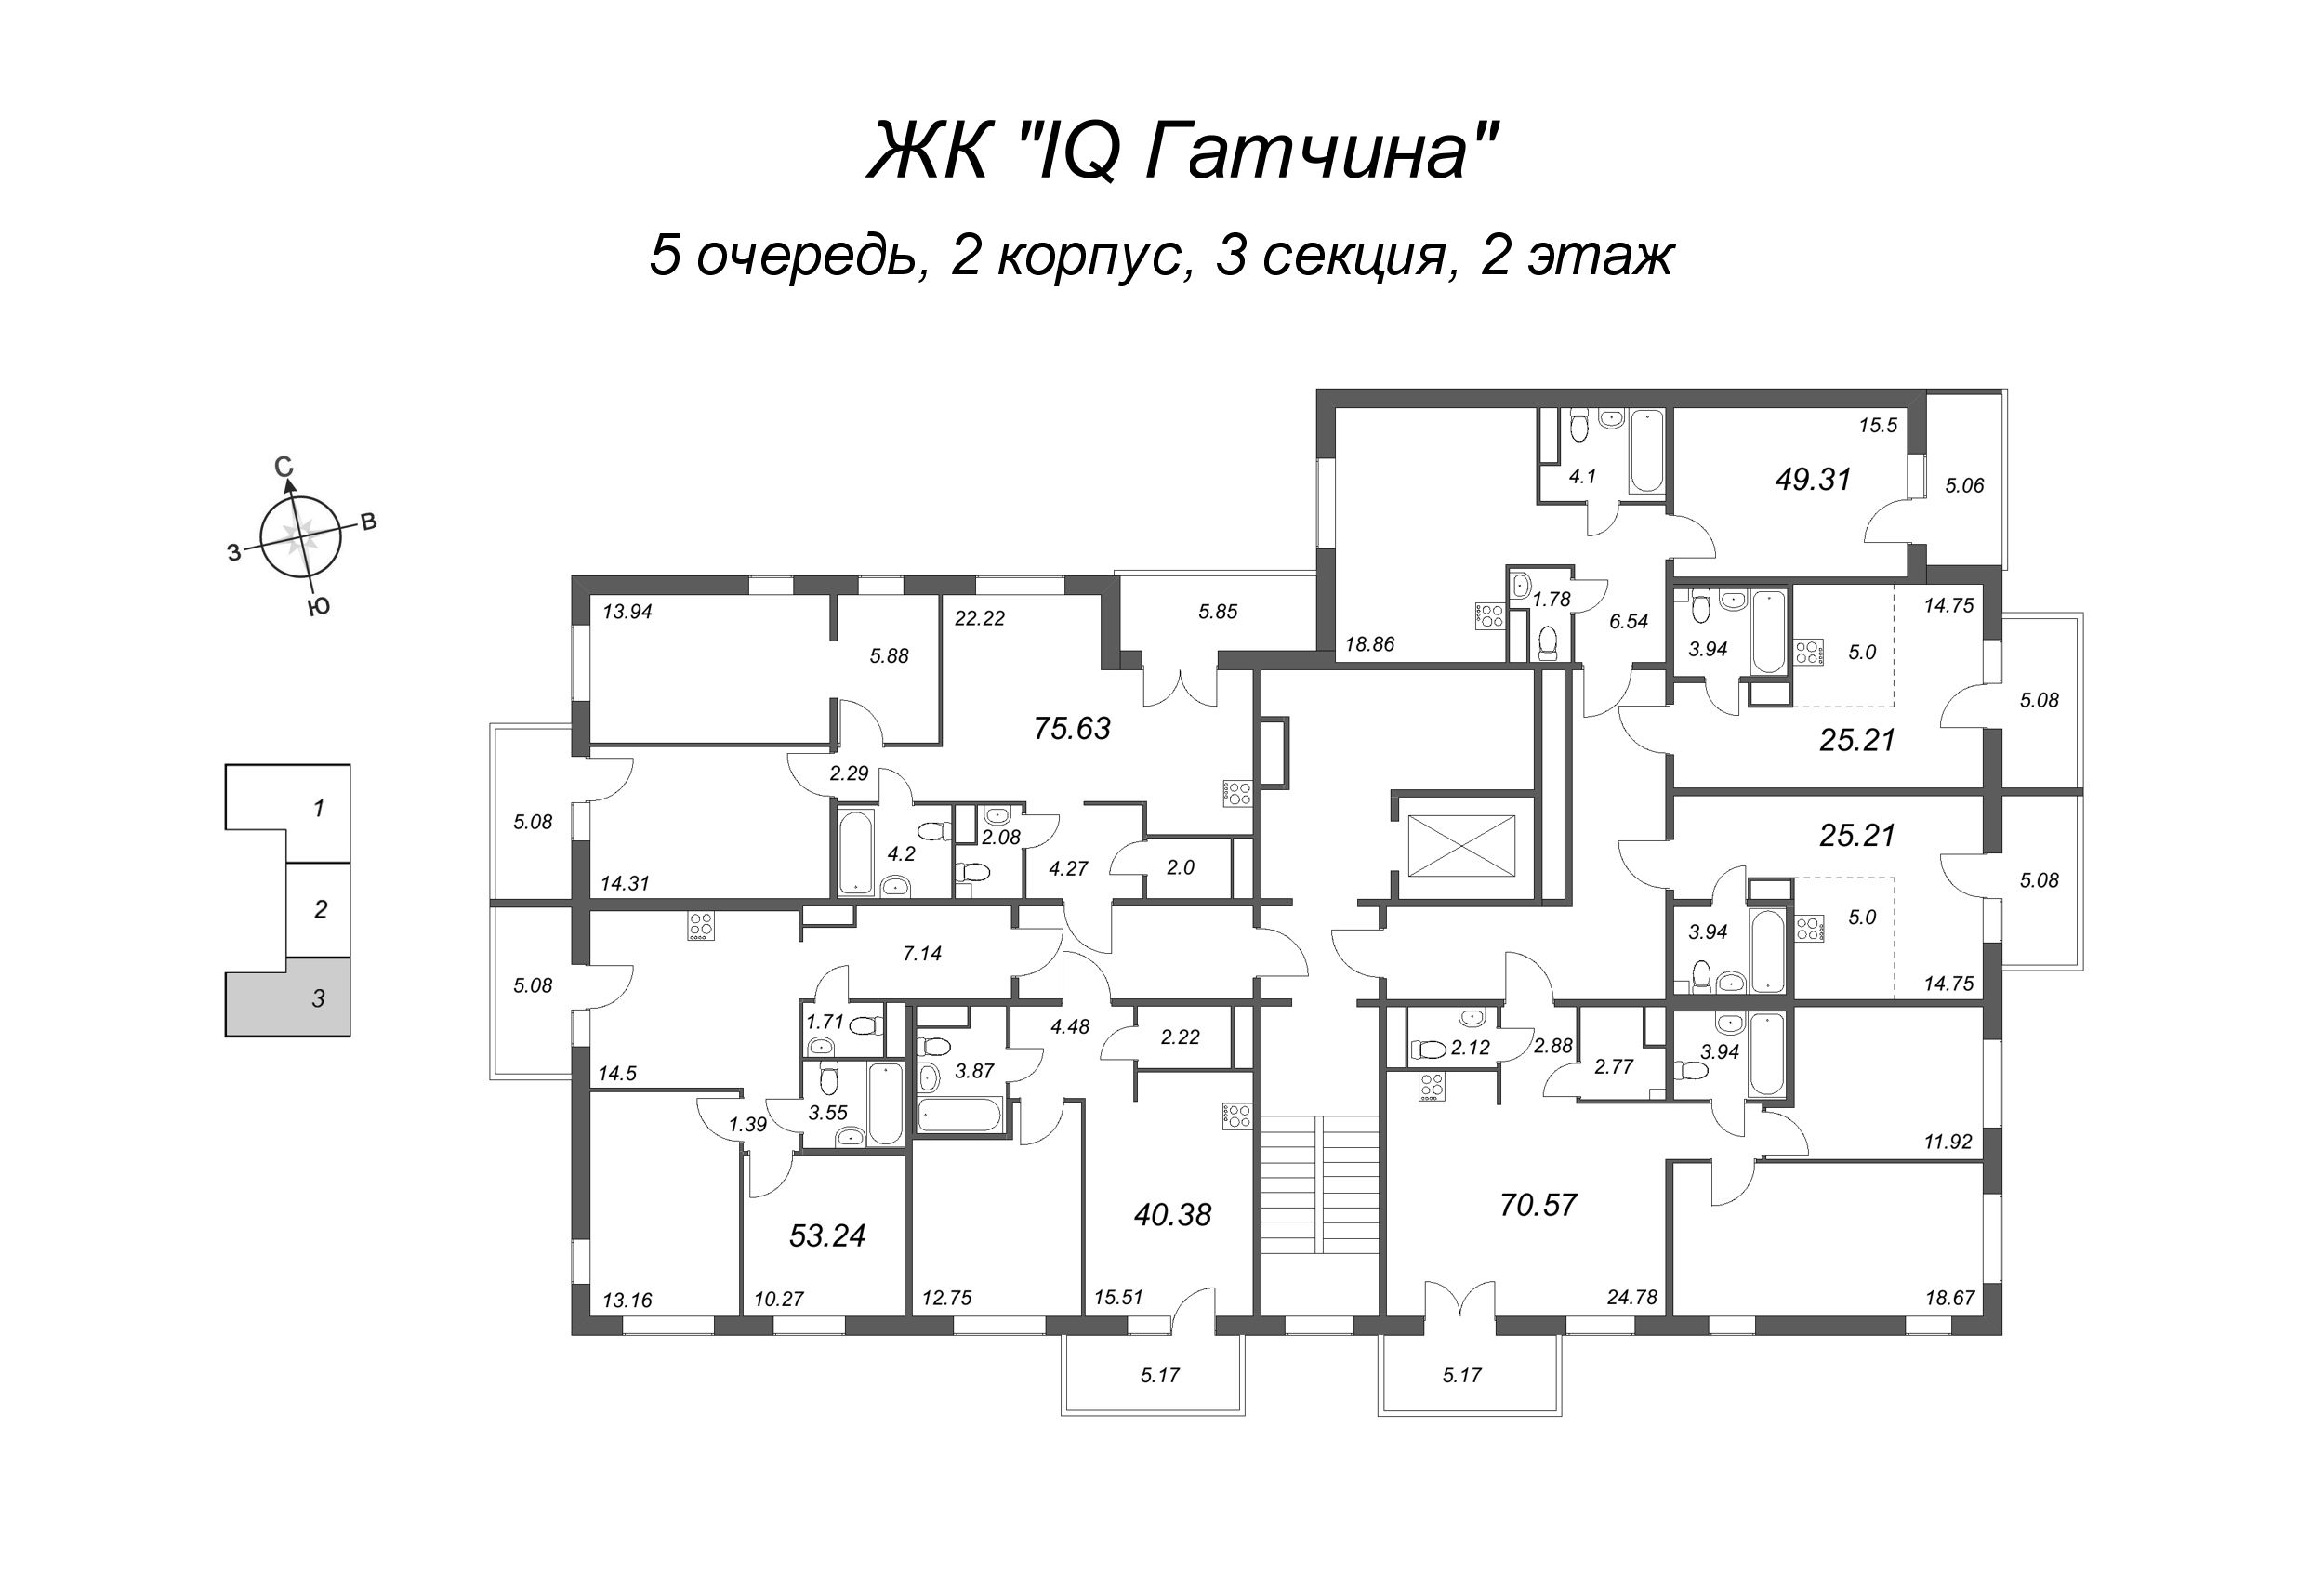 4-комнатная (Евро) квартира, 82.11 м² - планировка этажа